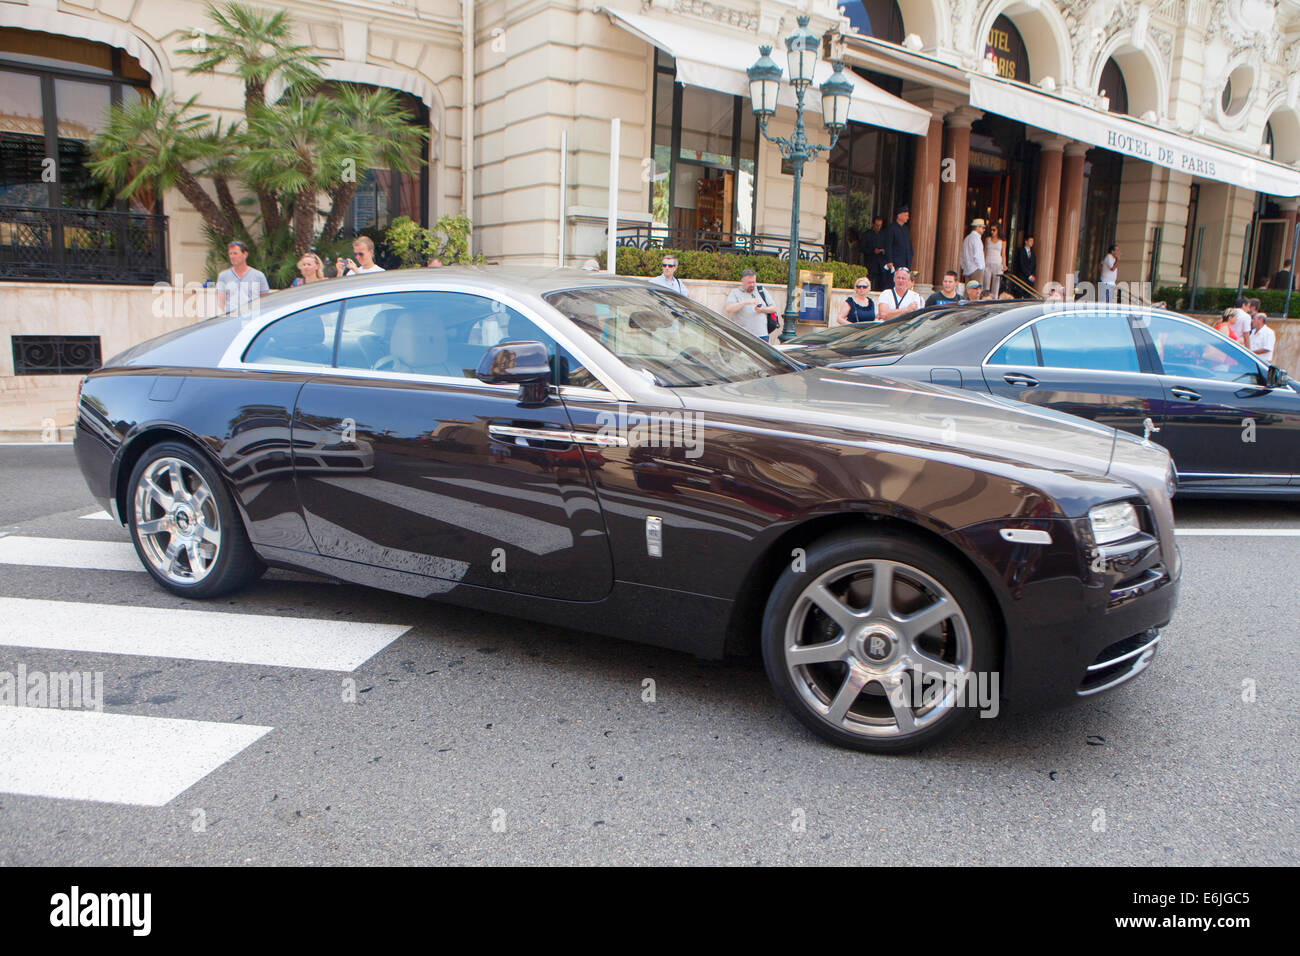 Rolls Royce Phantom Coupe in Monte Carlo an area of the Principality of  Monaco Stock Photo - Alamy